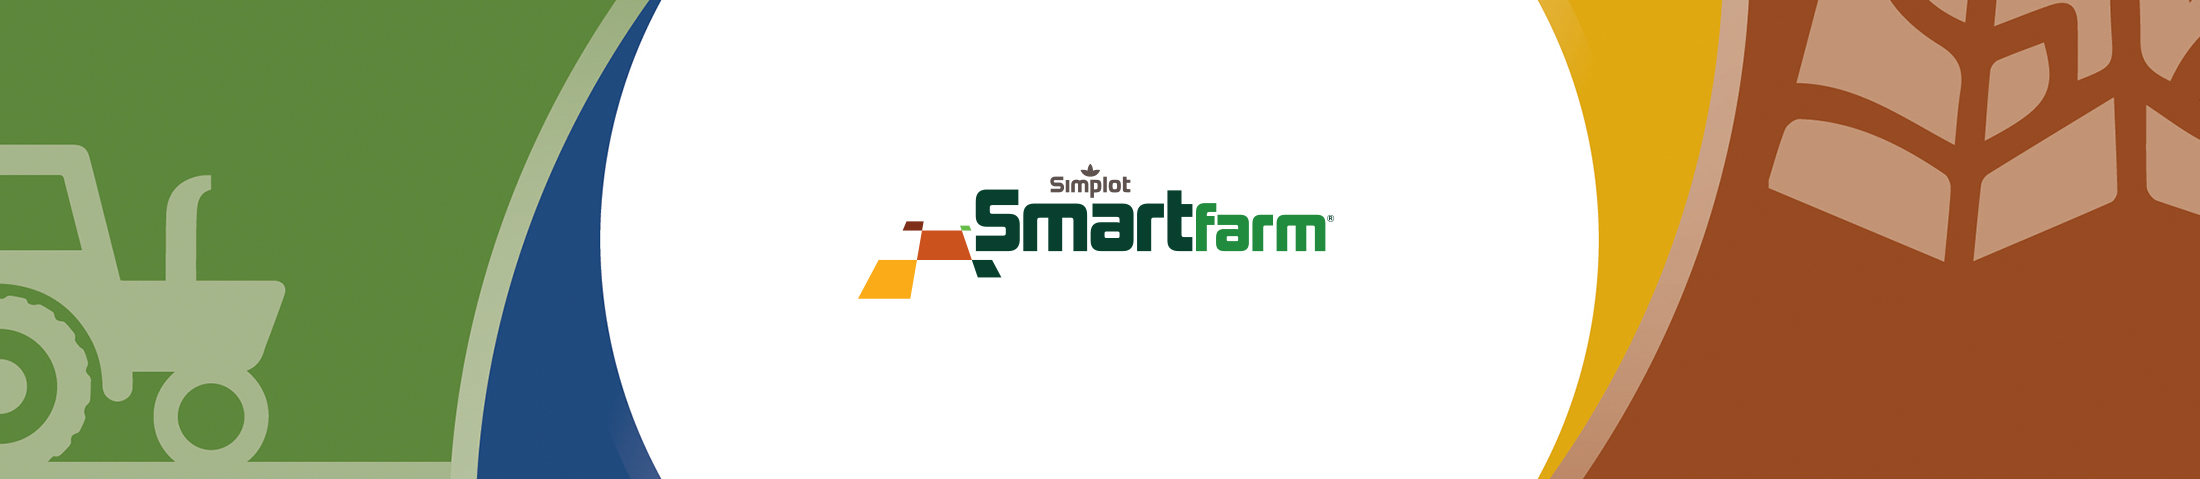 Smart Farm Data Driven Agronomy